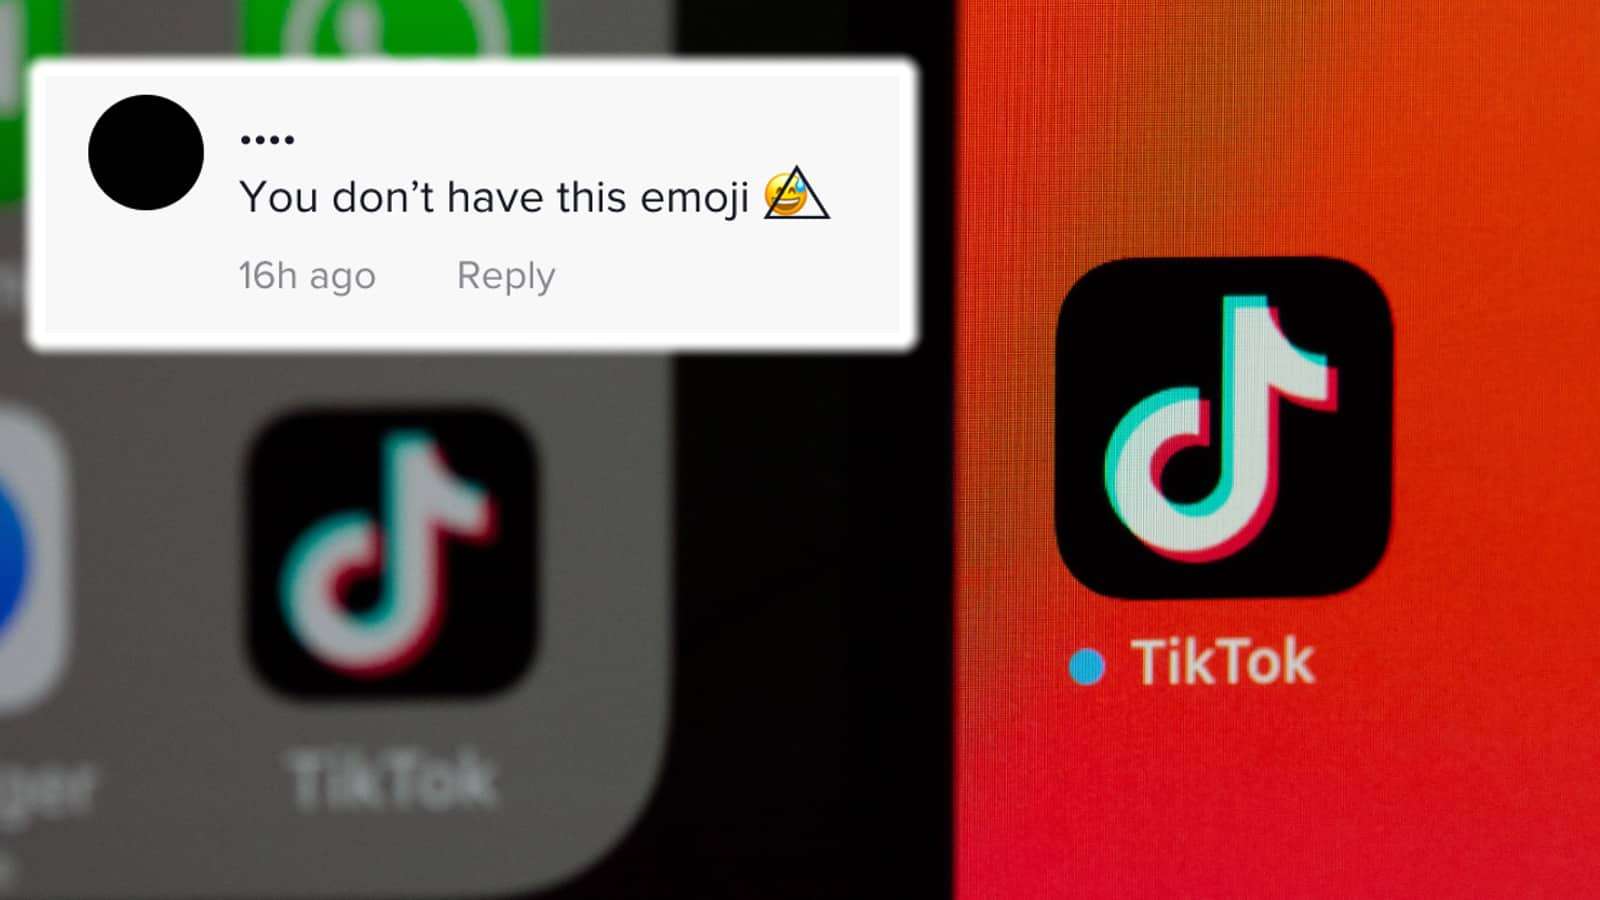 TikTok logo on phone next to screenshot of comment